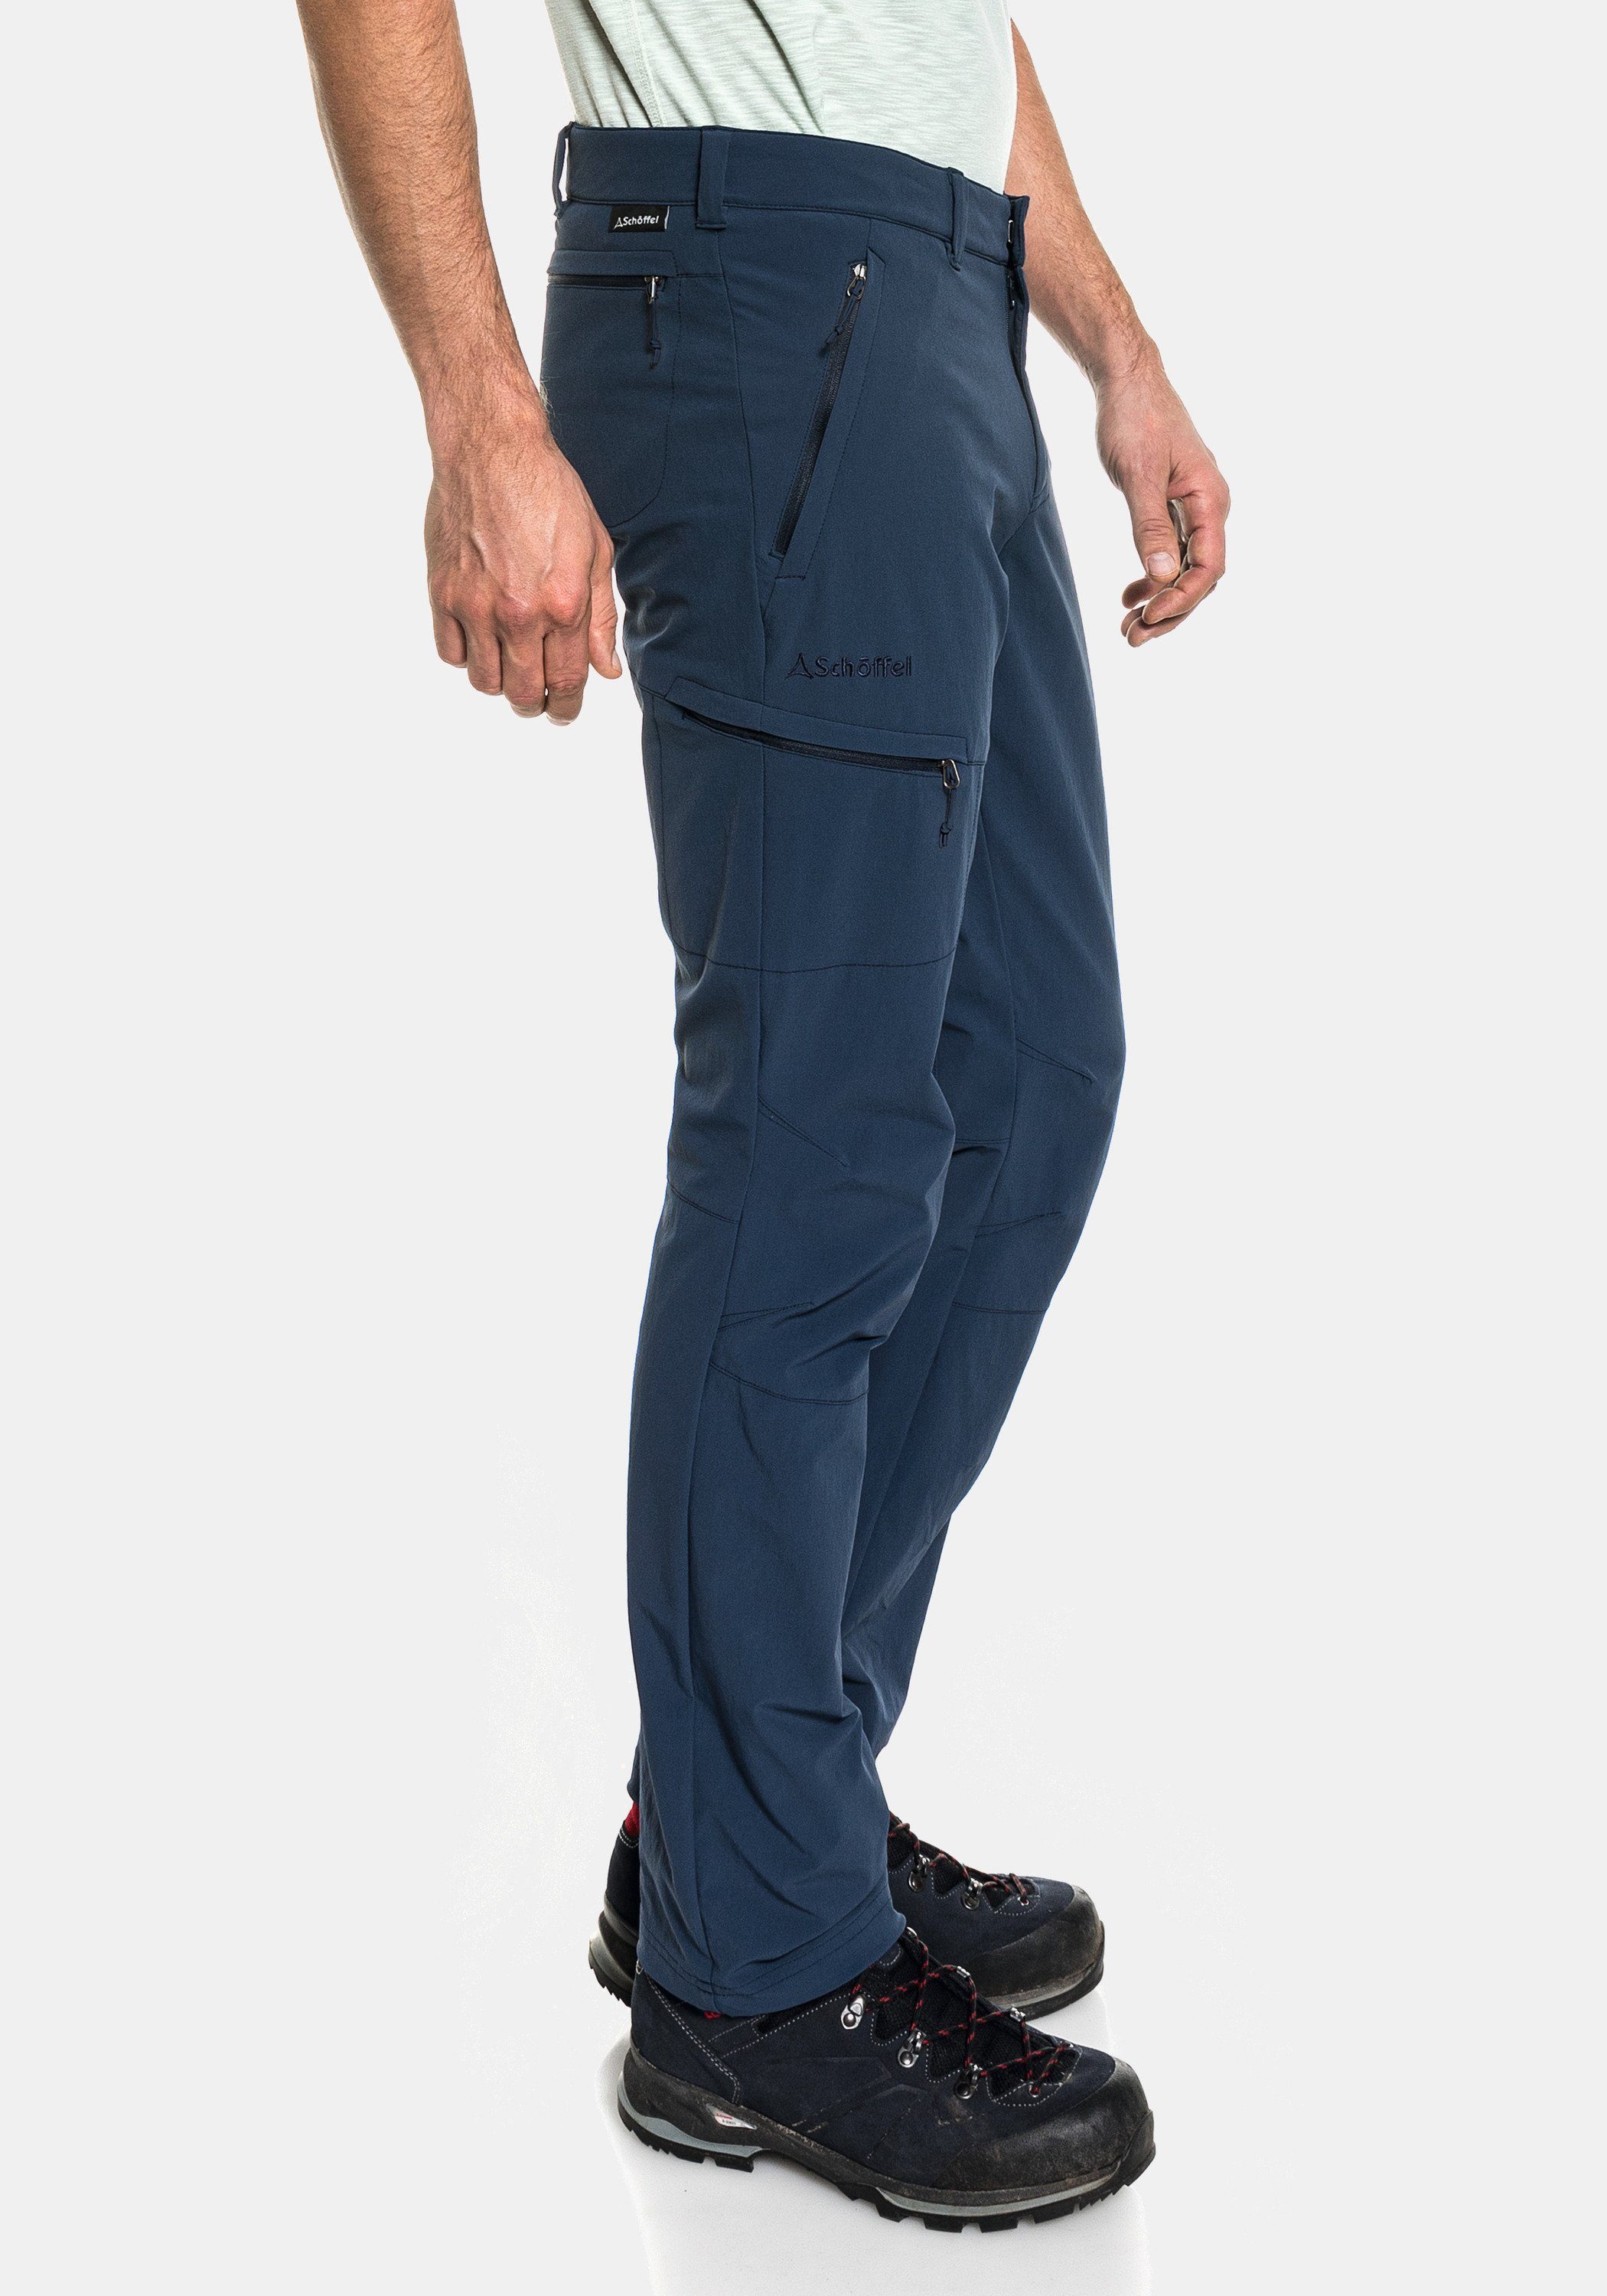 Schöffel Outdoorhose Pants Koper1 dunkelblau